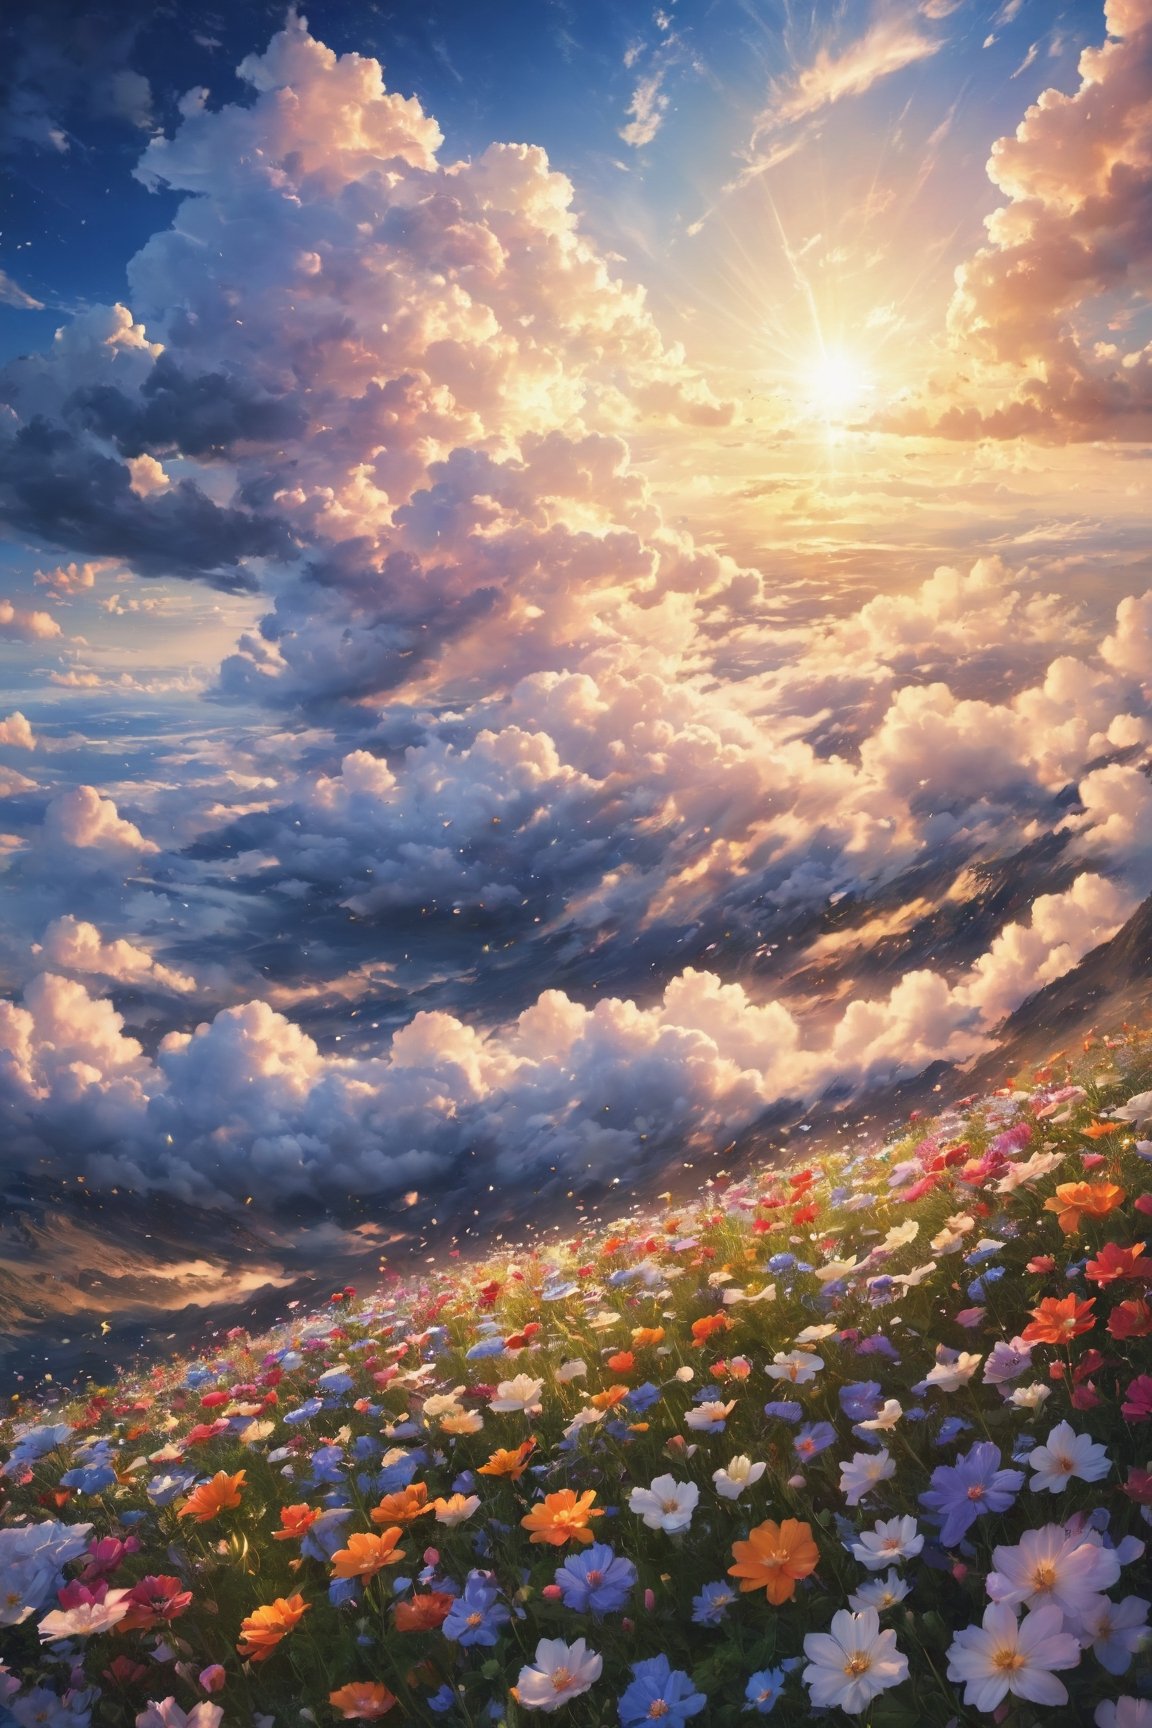 EpicSky, a sky full of flowers,cloud